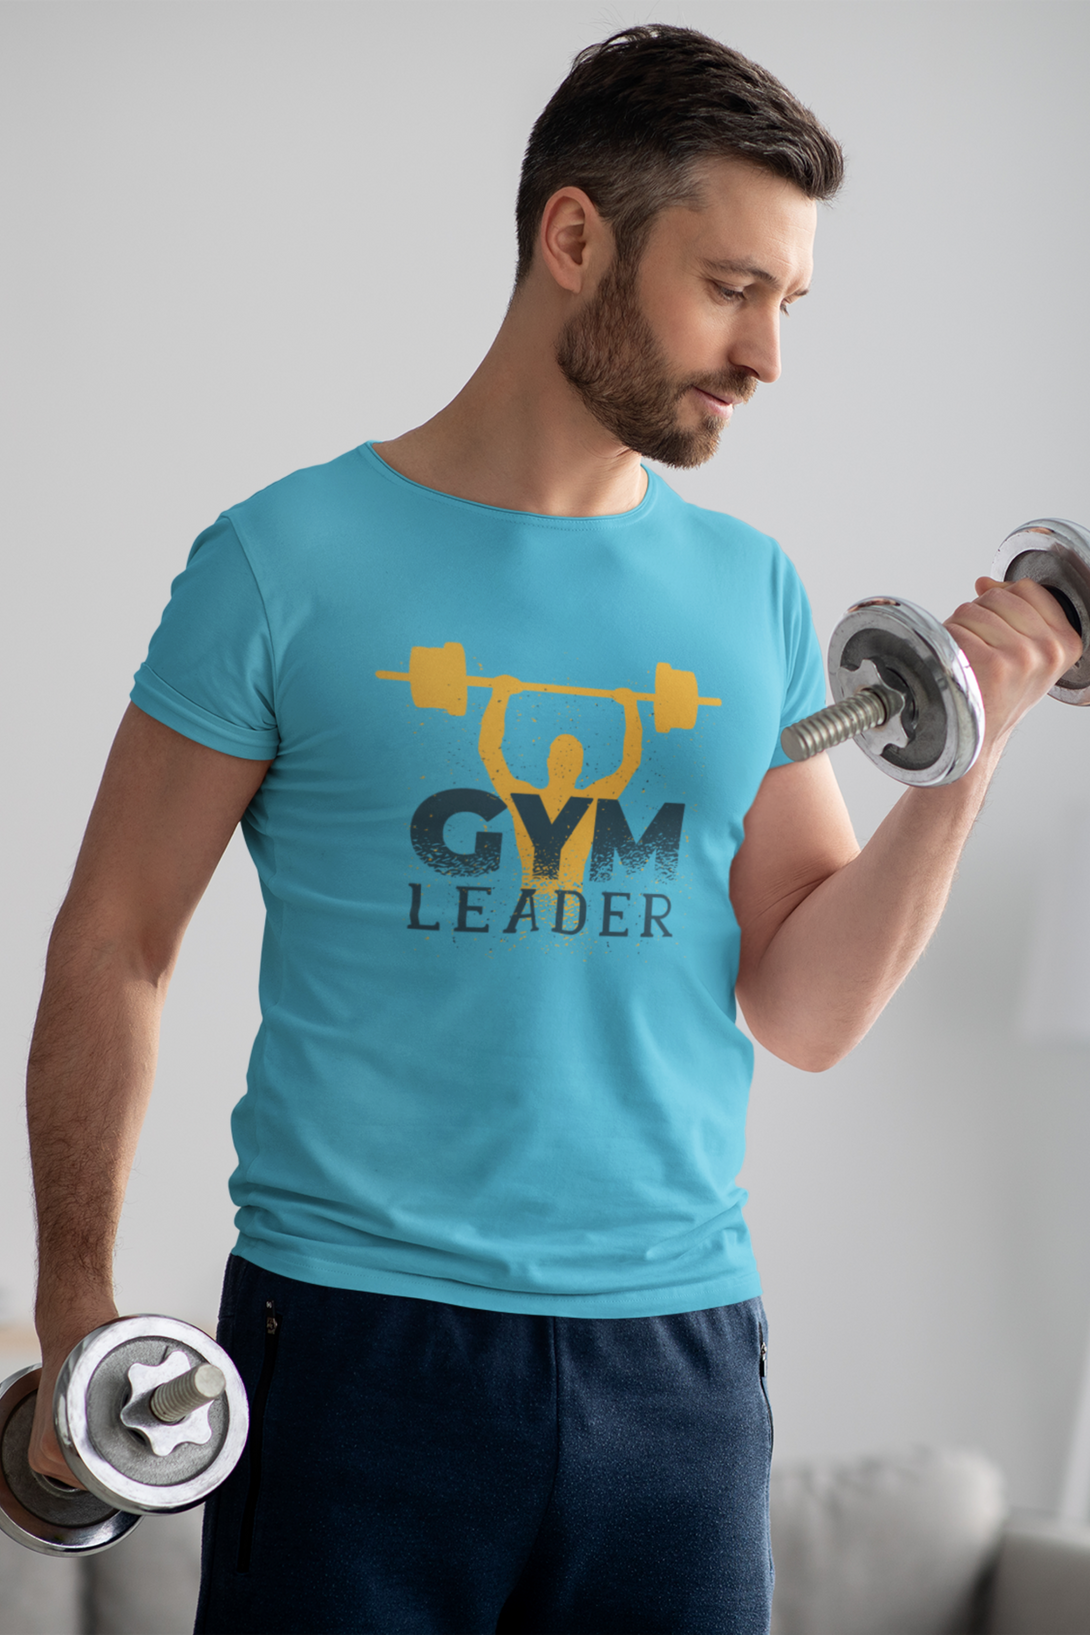 Gym Leader Printed T-Shirt For Men - WowWaves - 5